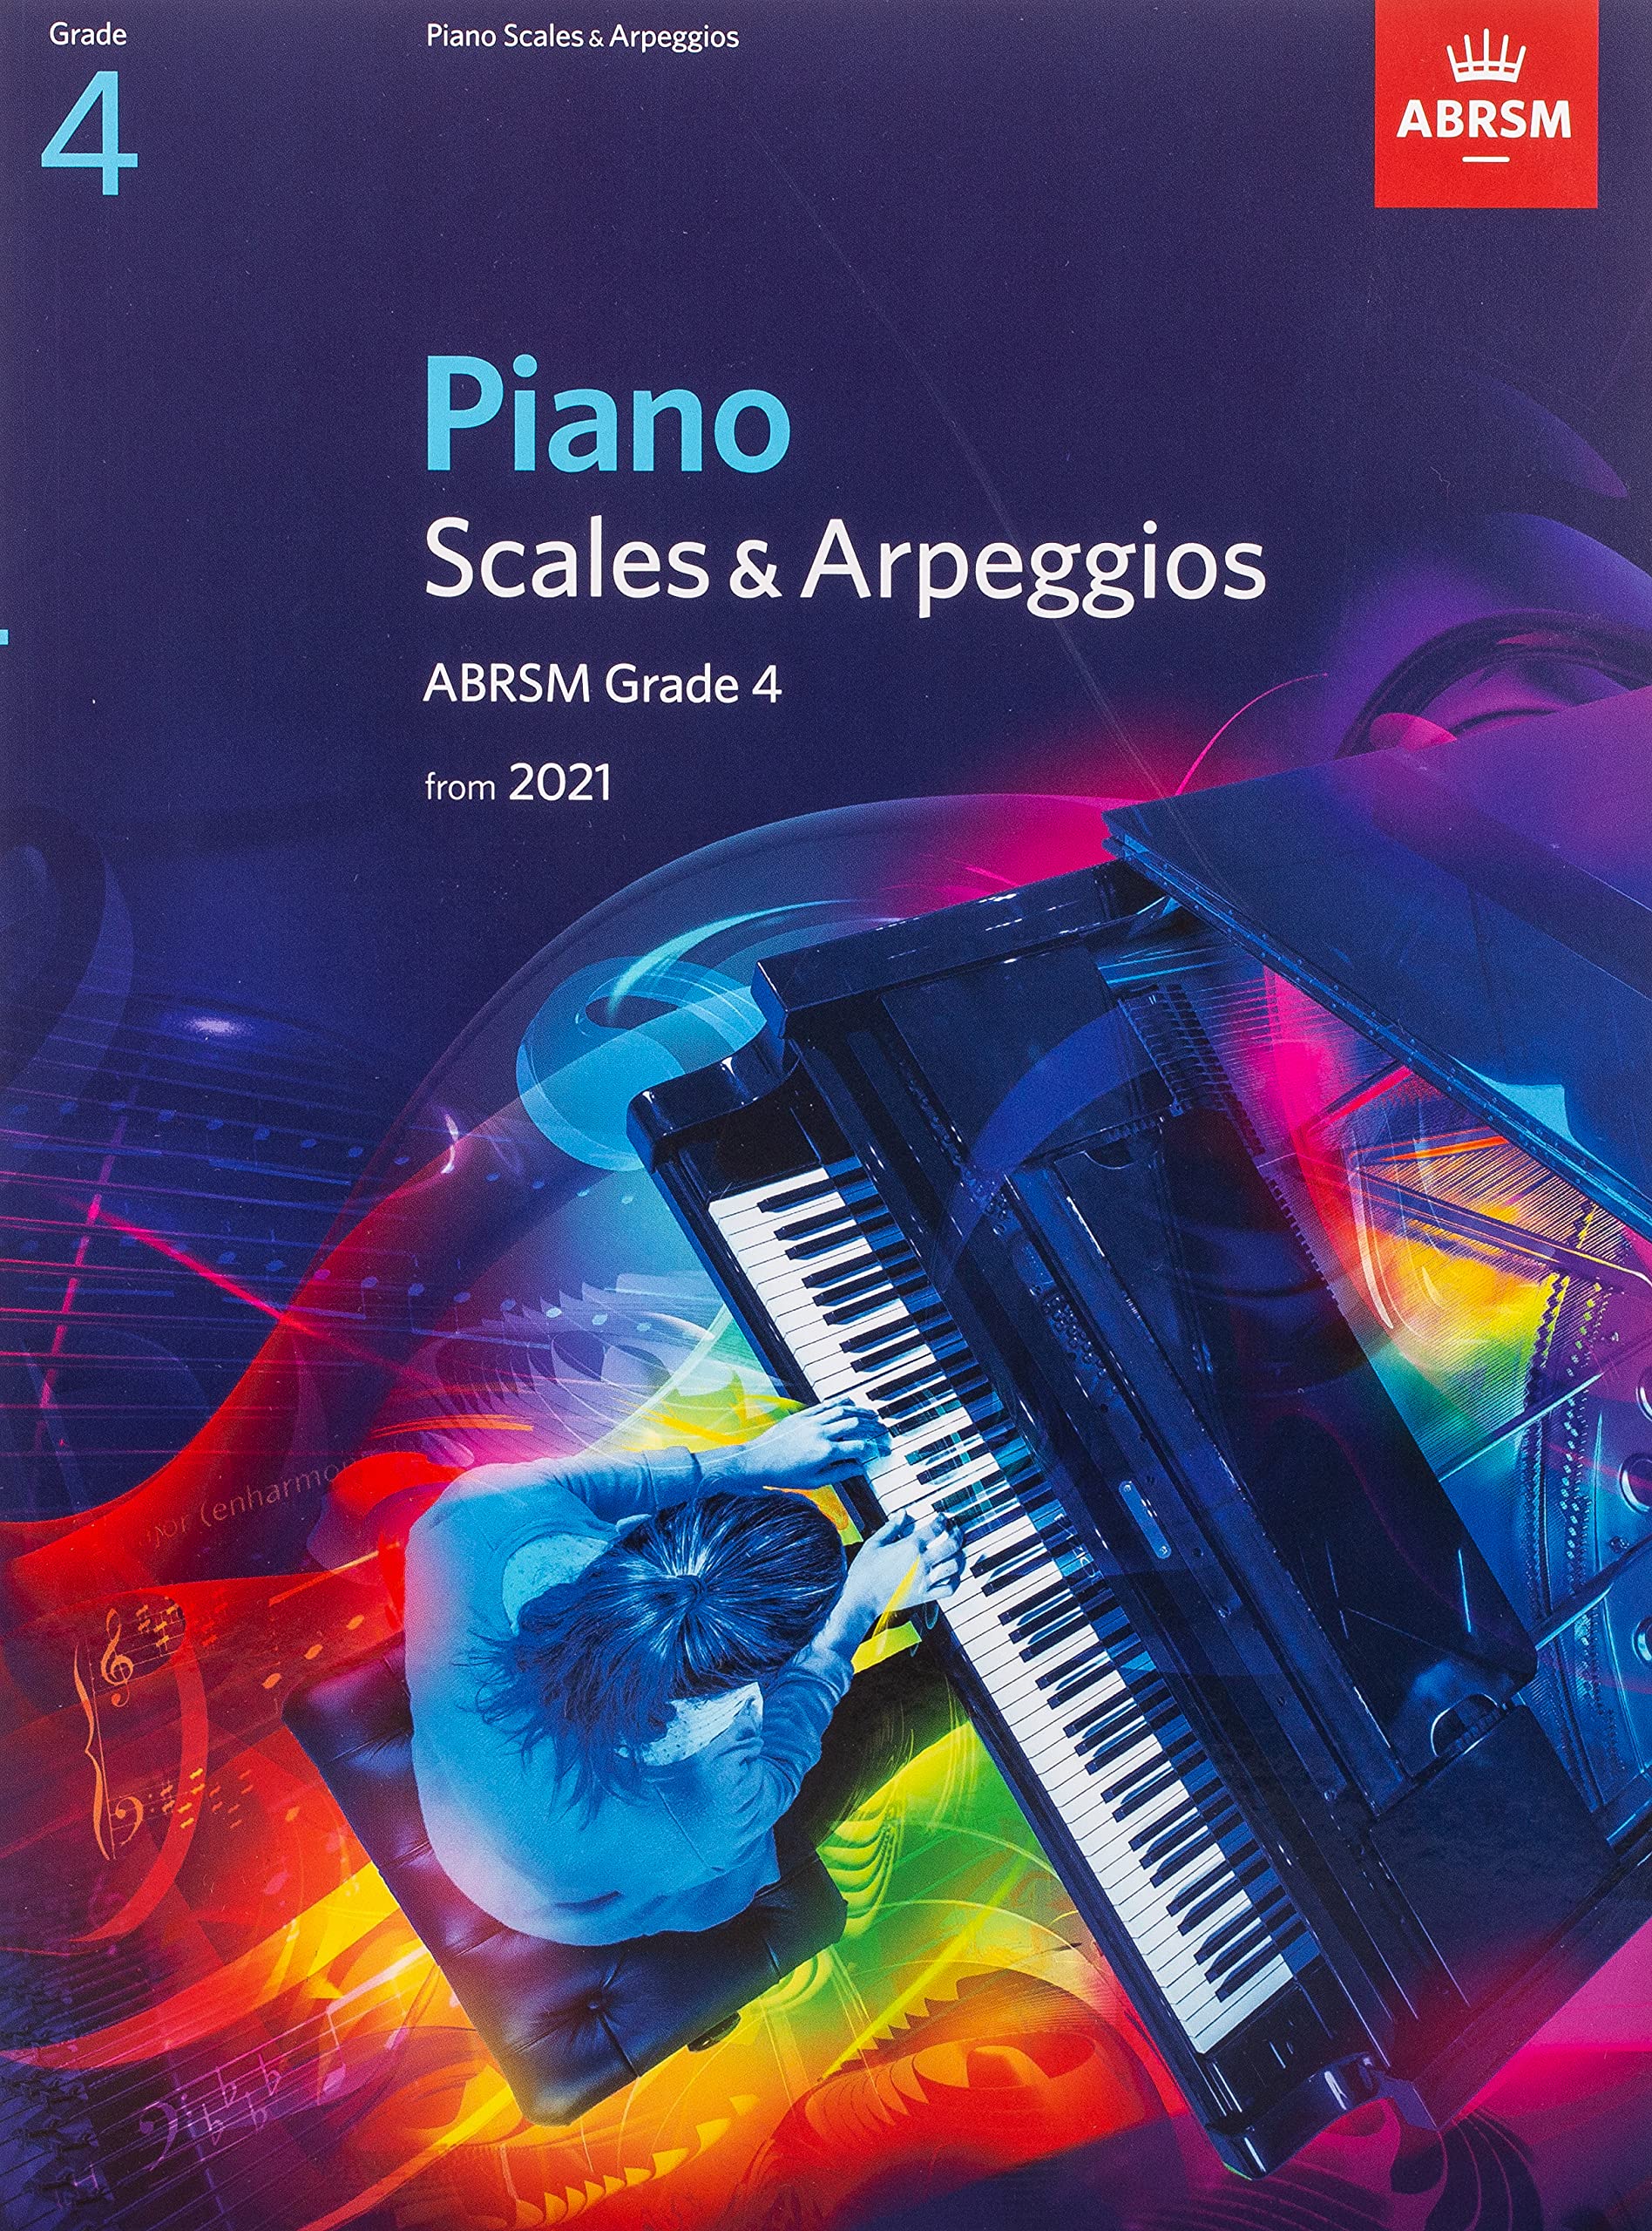 ABRSM Piano Scales & Arpeggios from 2021 Grade 4